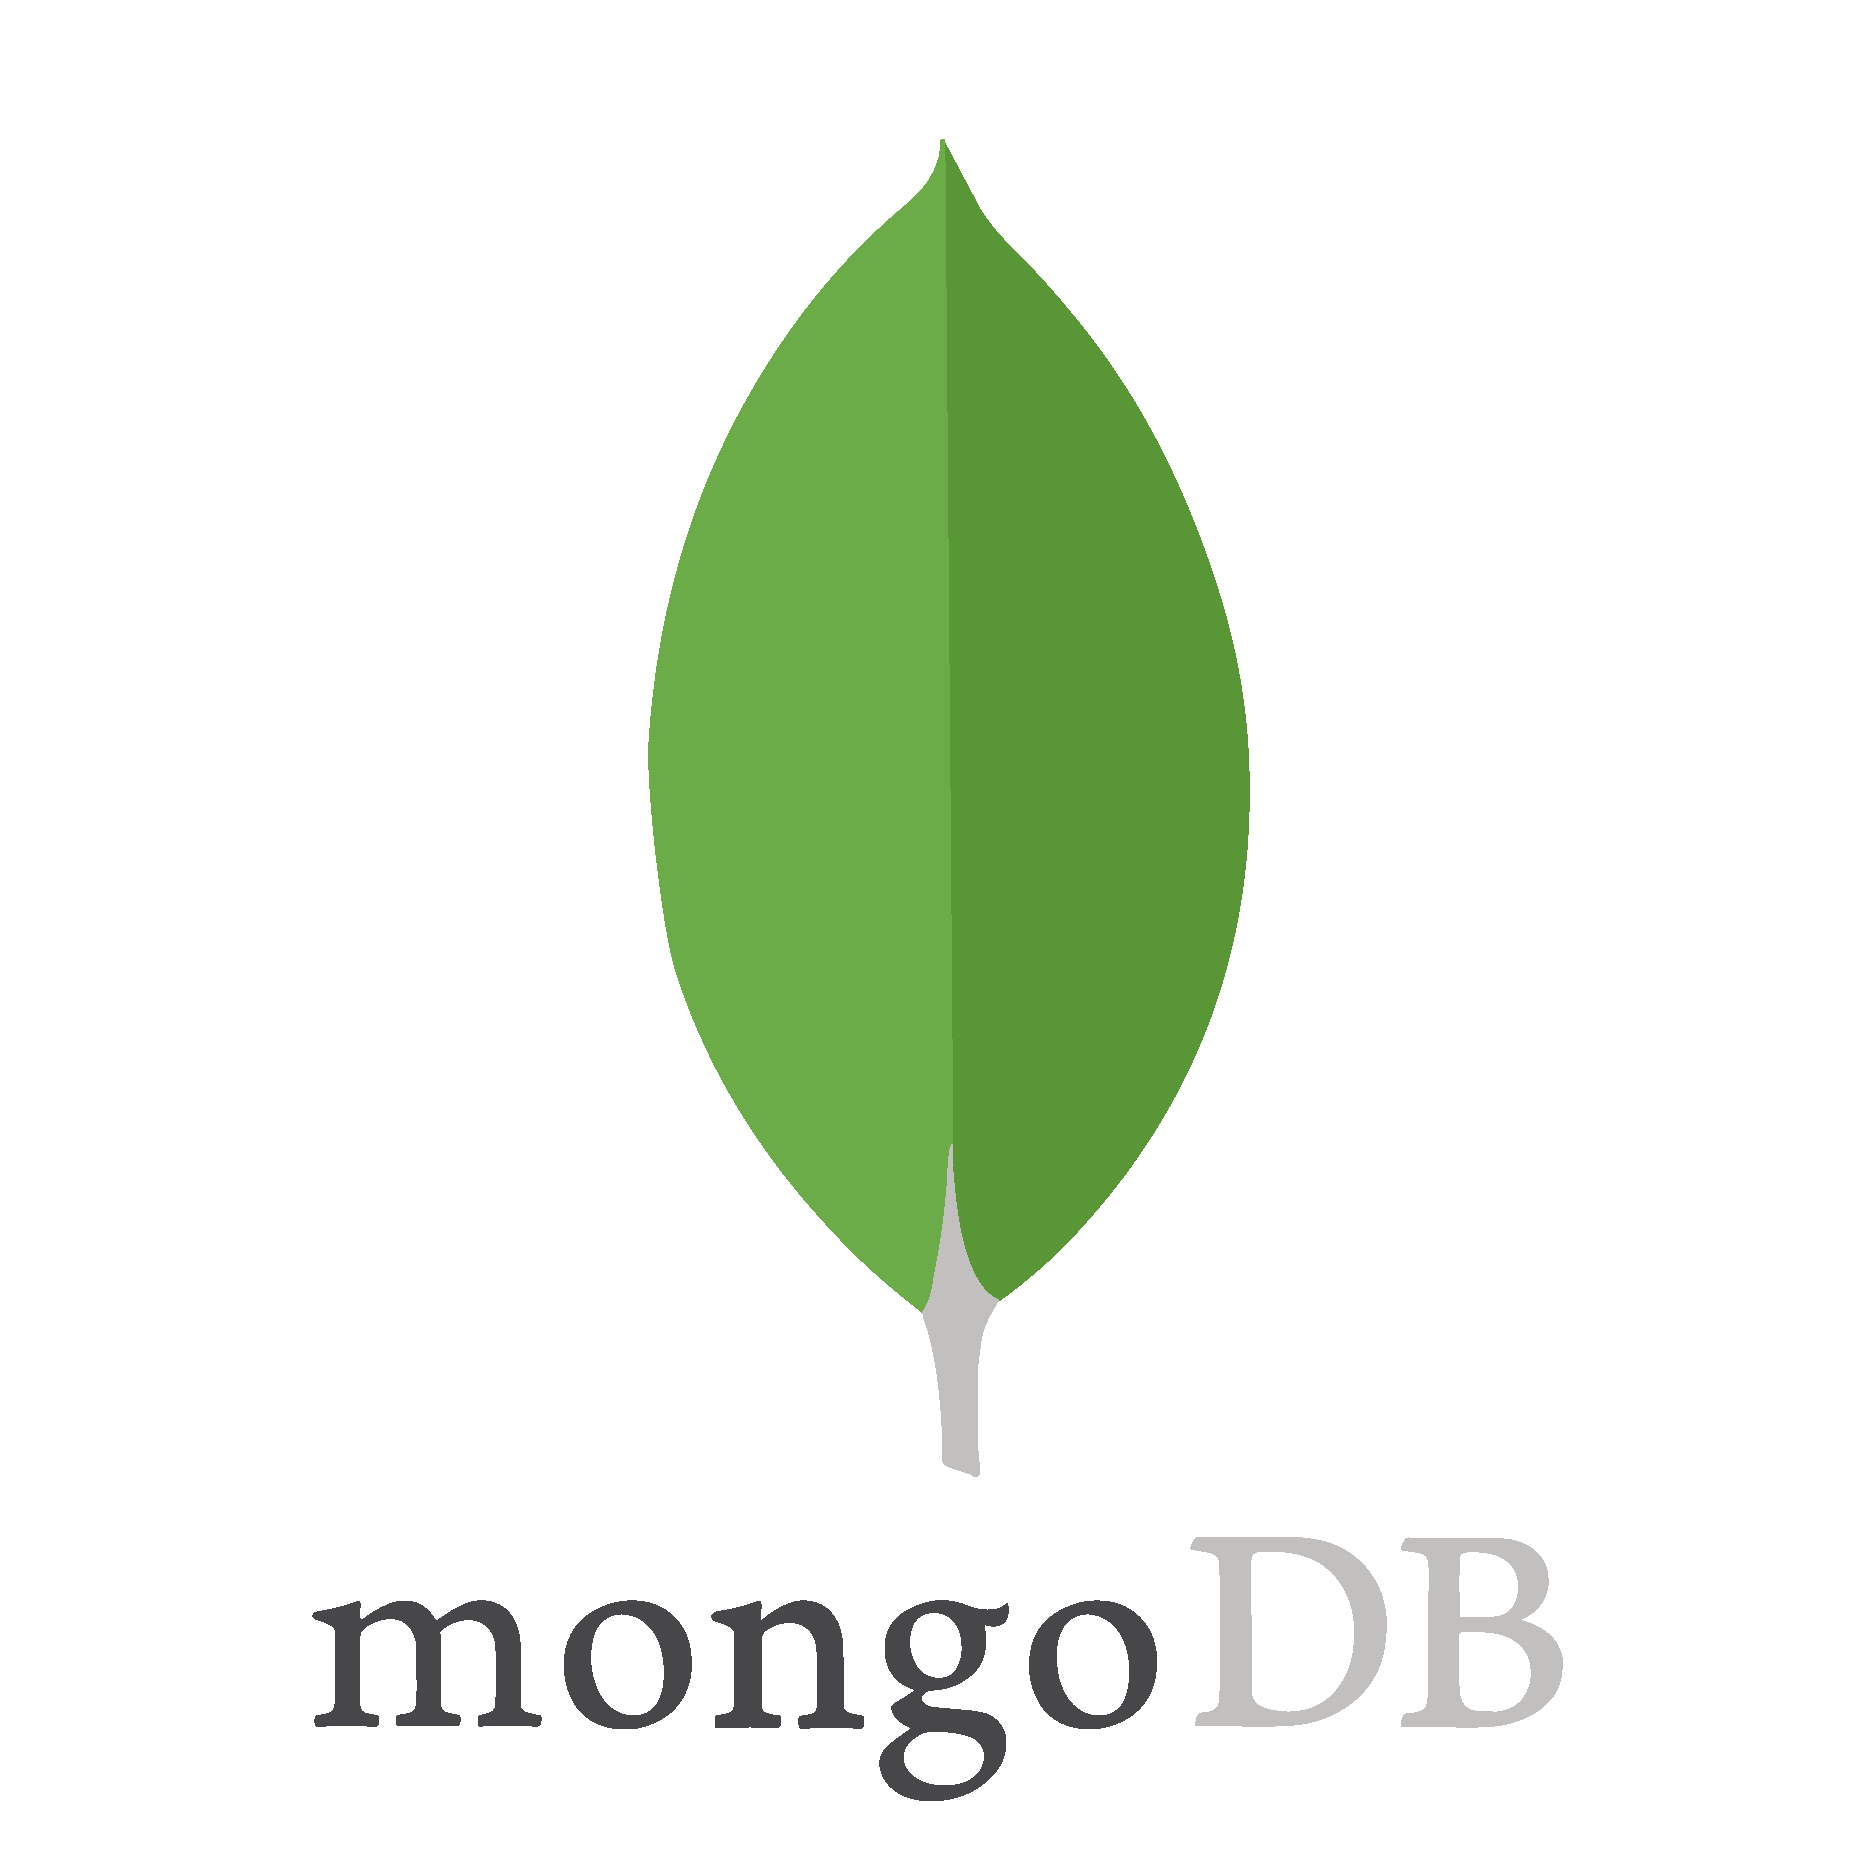 Mongodb Logo png download - 512*512 - Free Transparent Nodejs png Download.  - CleanPNG / KissPNG